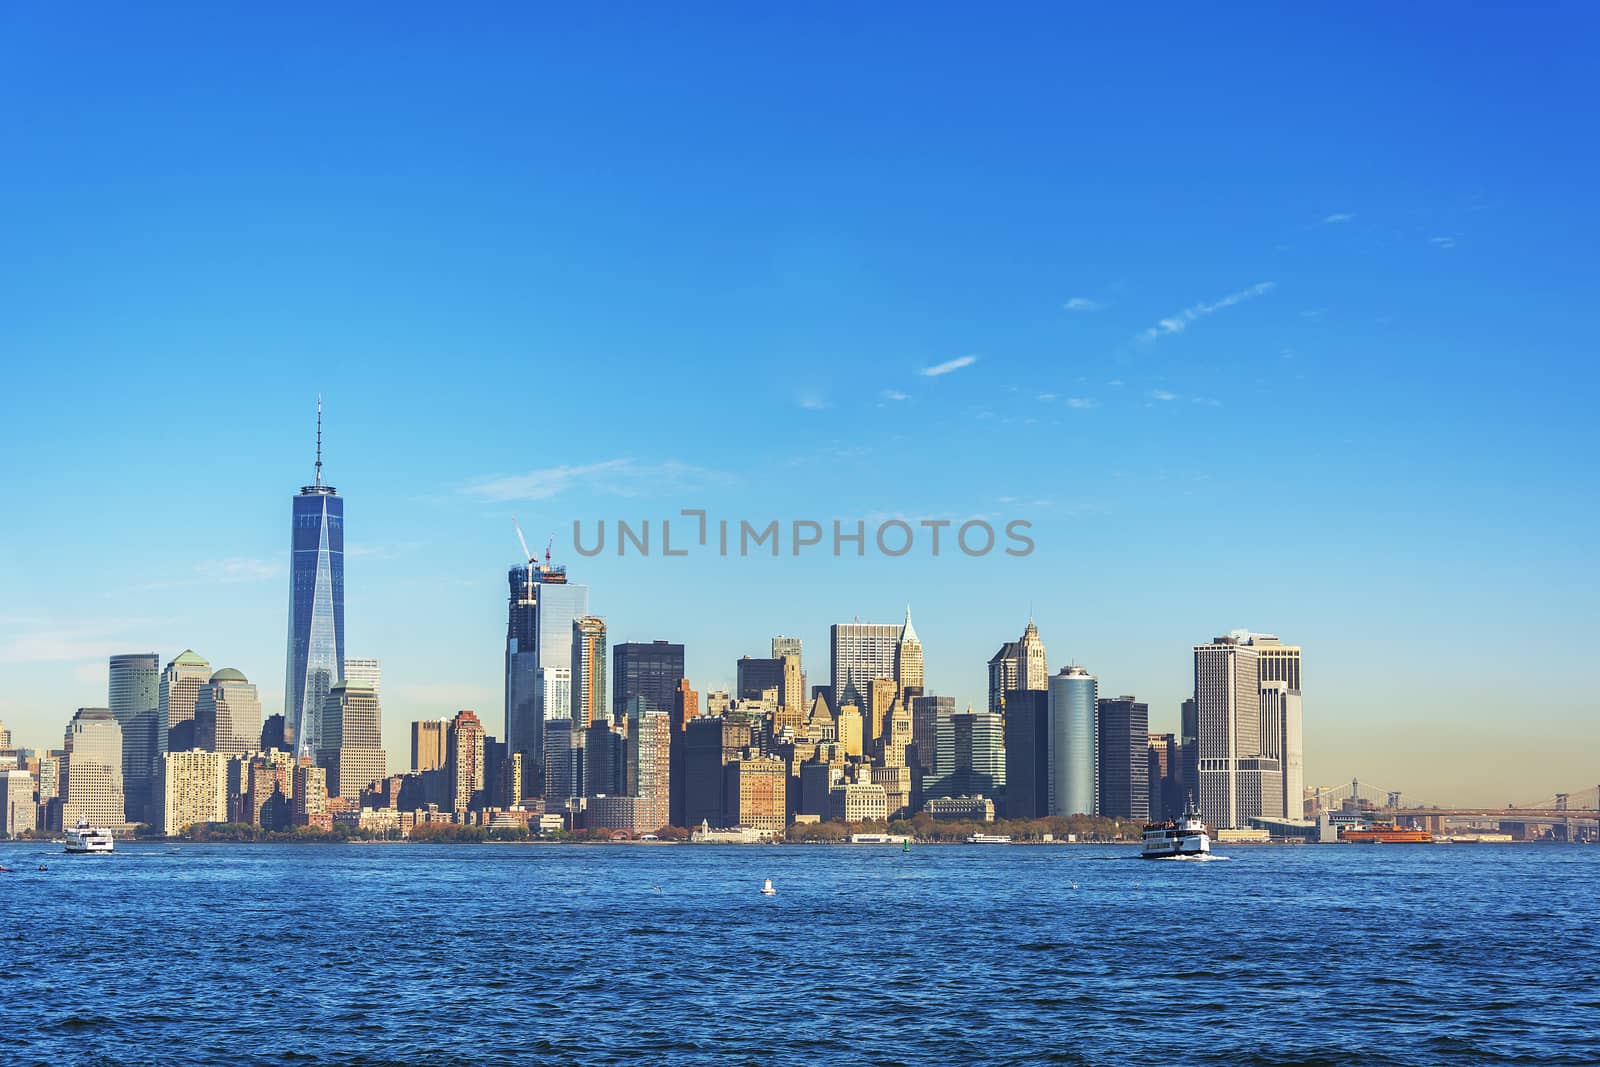 New York City skyline from Liberty island by rarrarorro